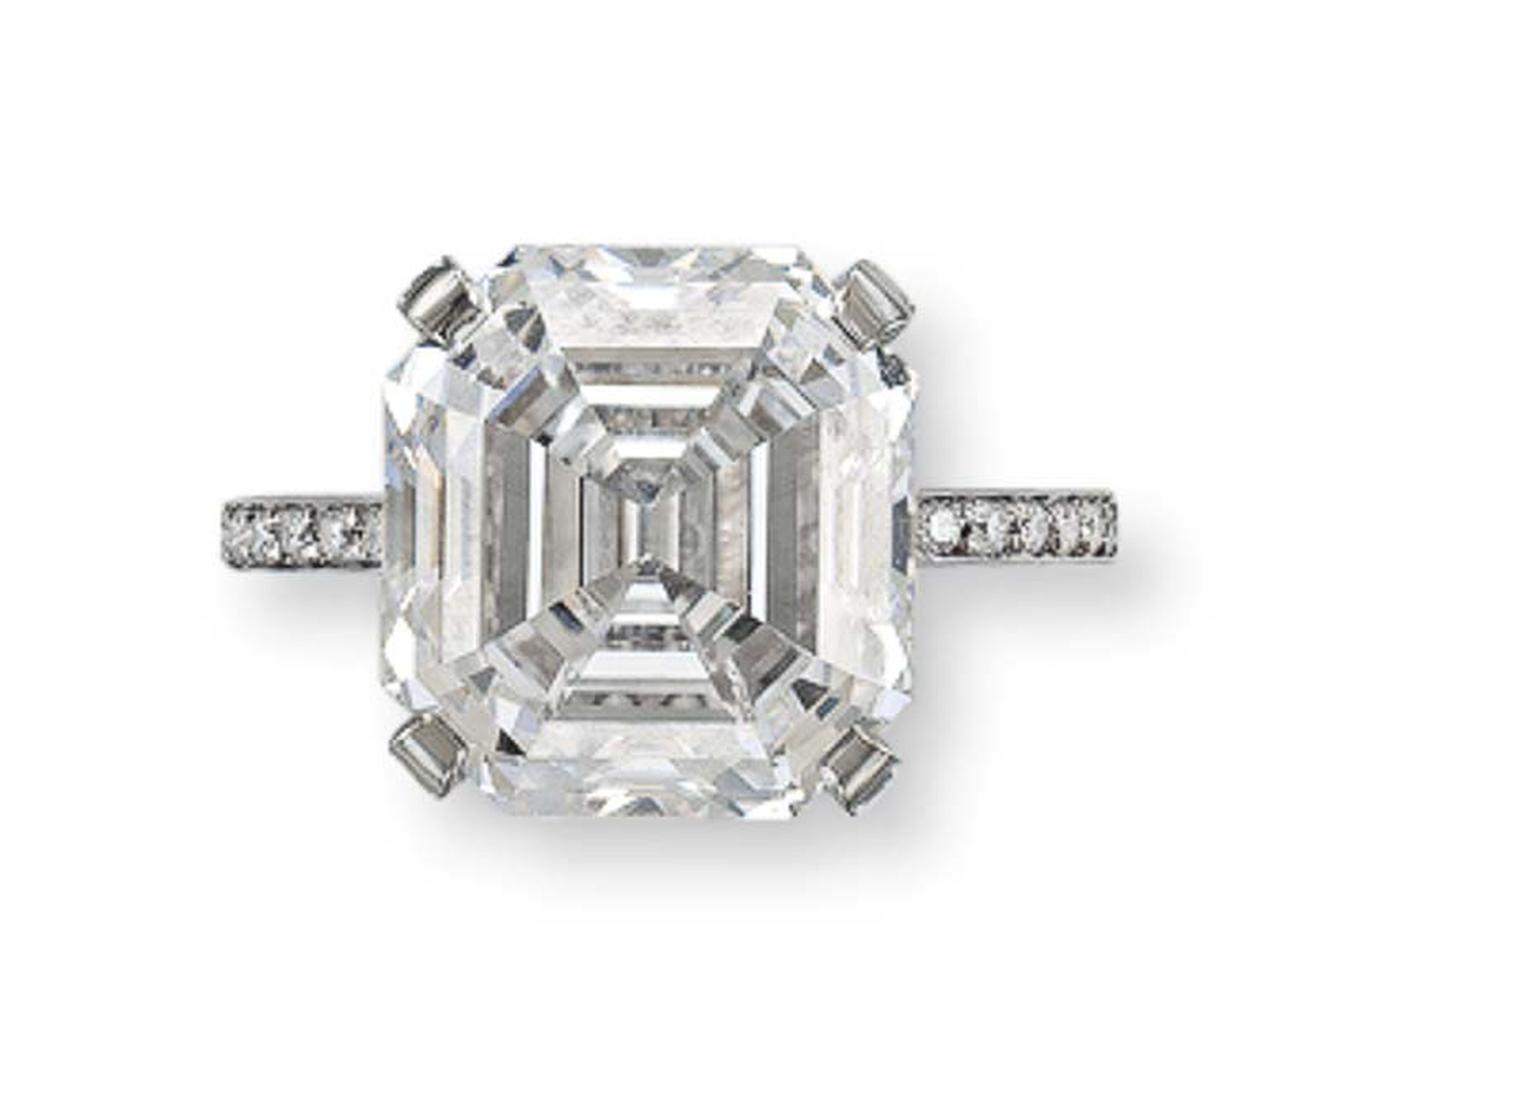 Rectangular D color 10.03ct Internally Flawless diamond ring (estimate: US$800,000-1 million).